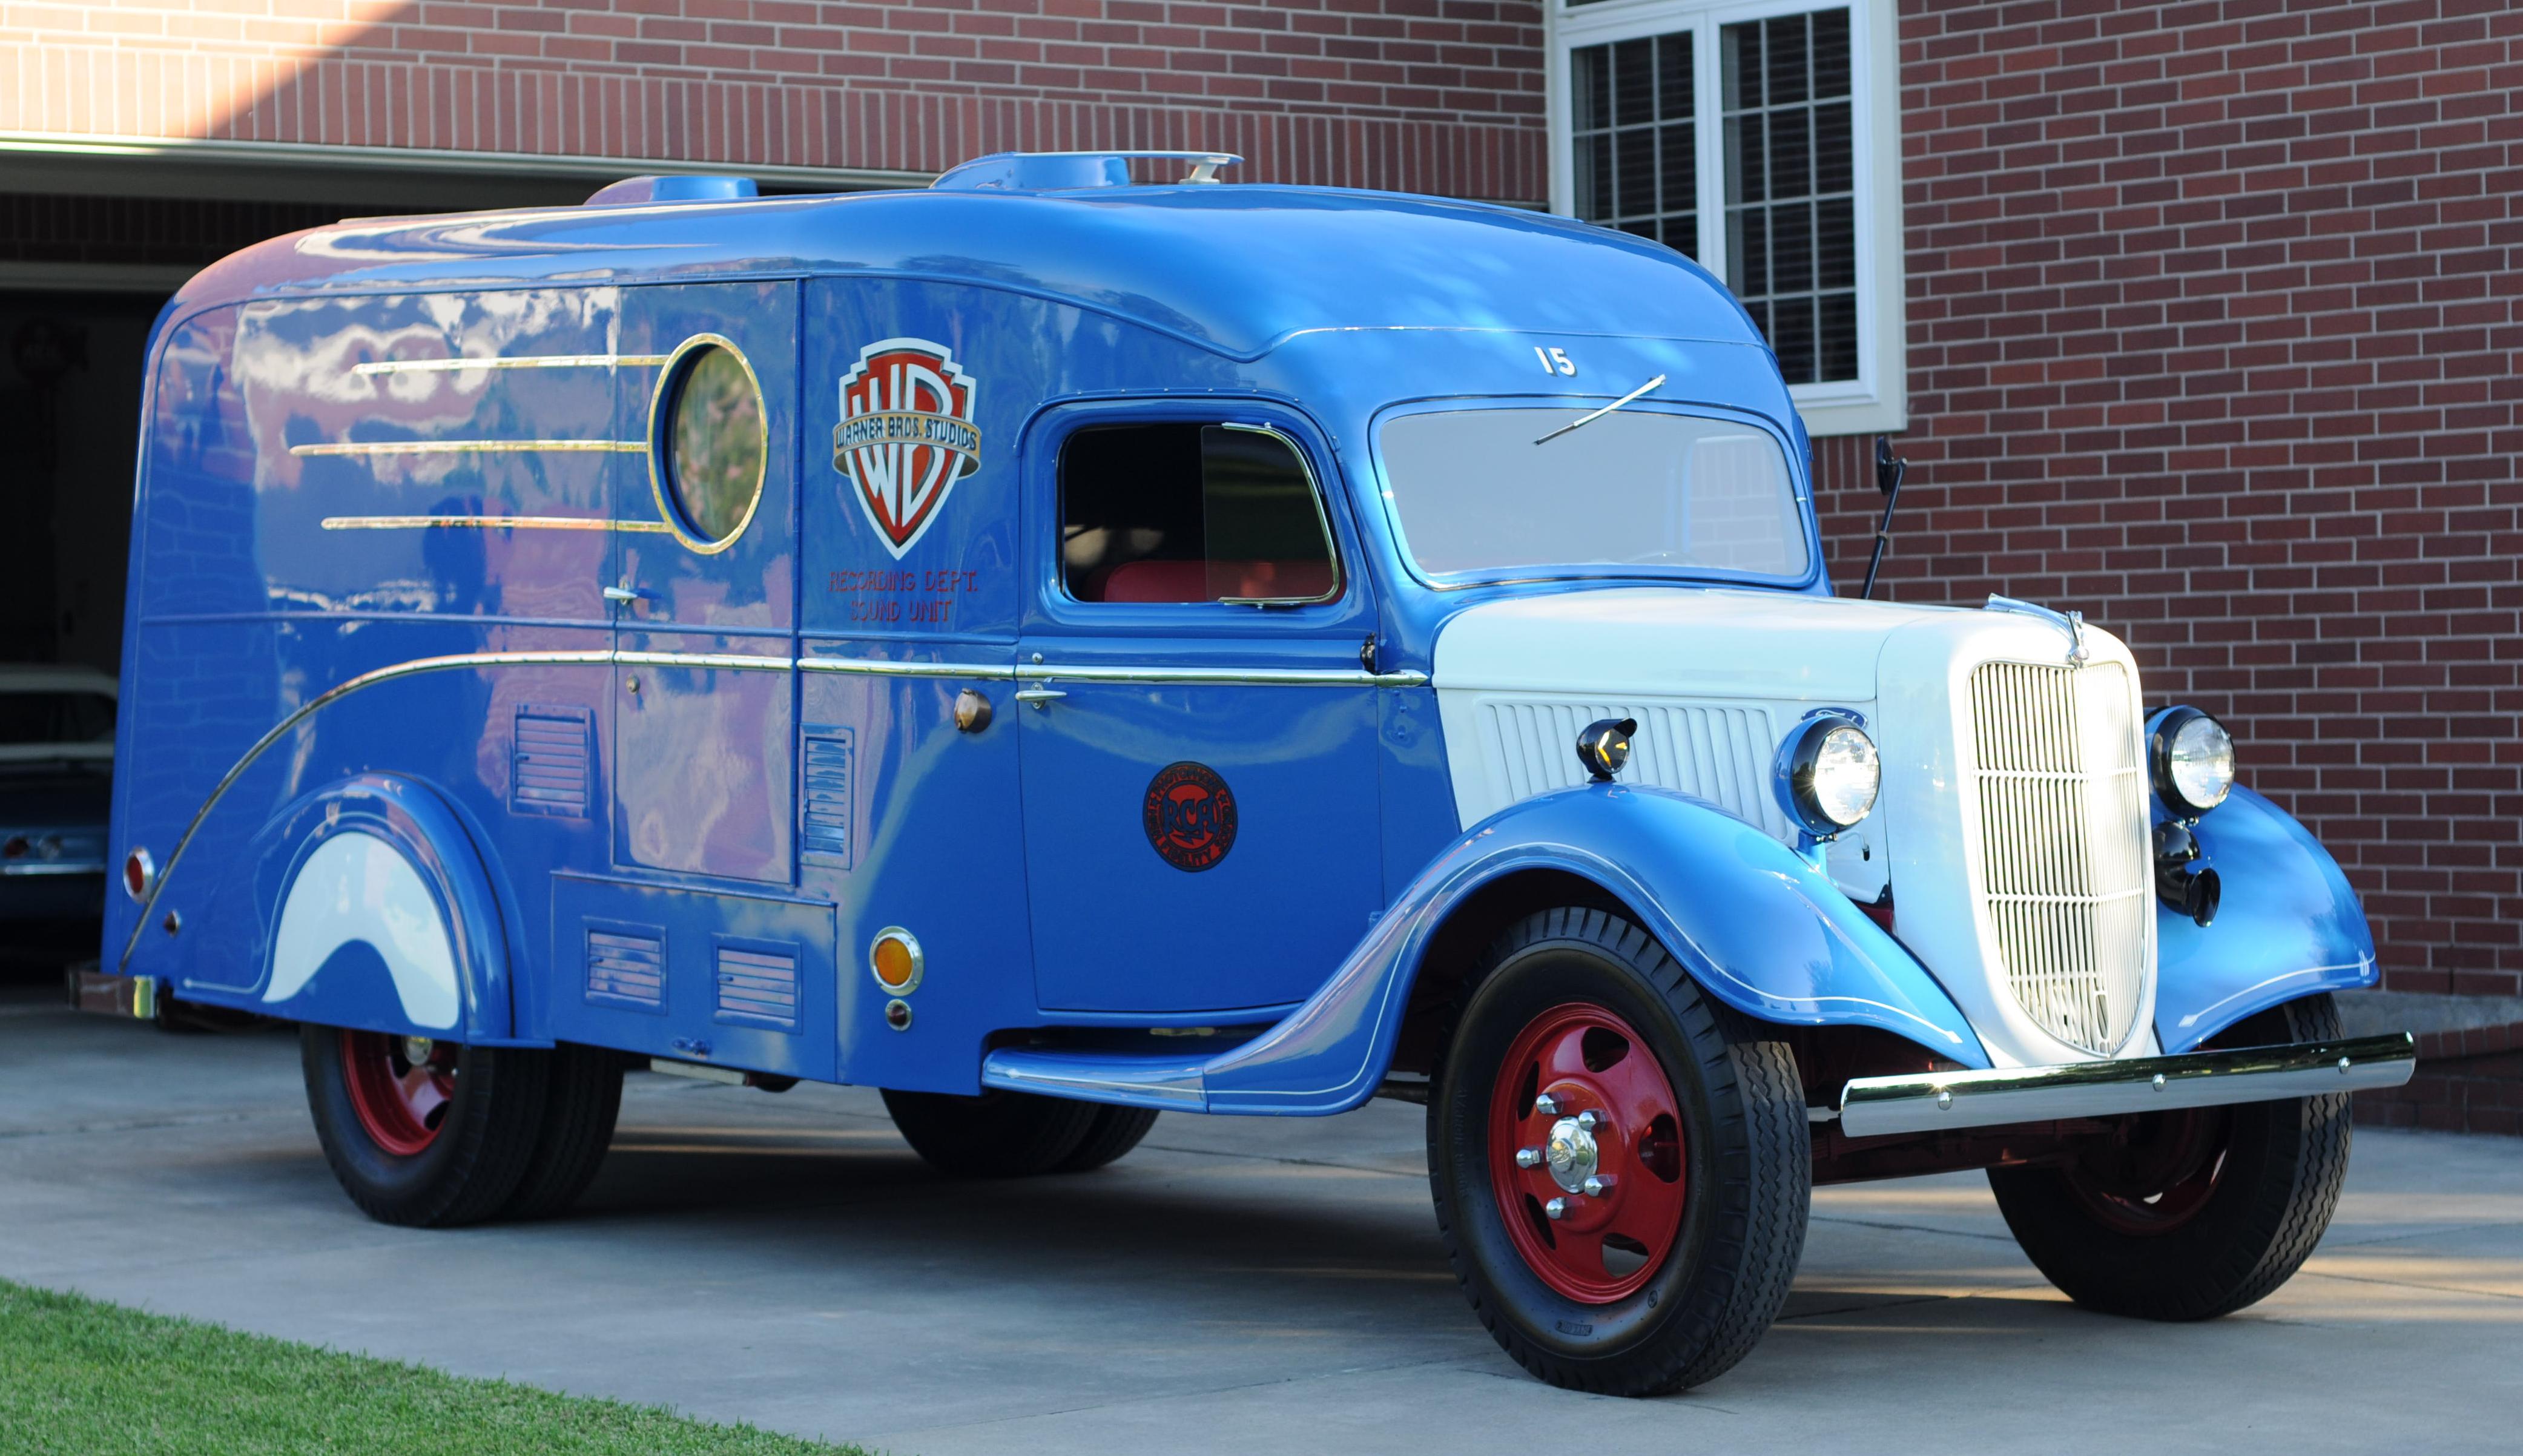 Warner Brothers Sound Truck